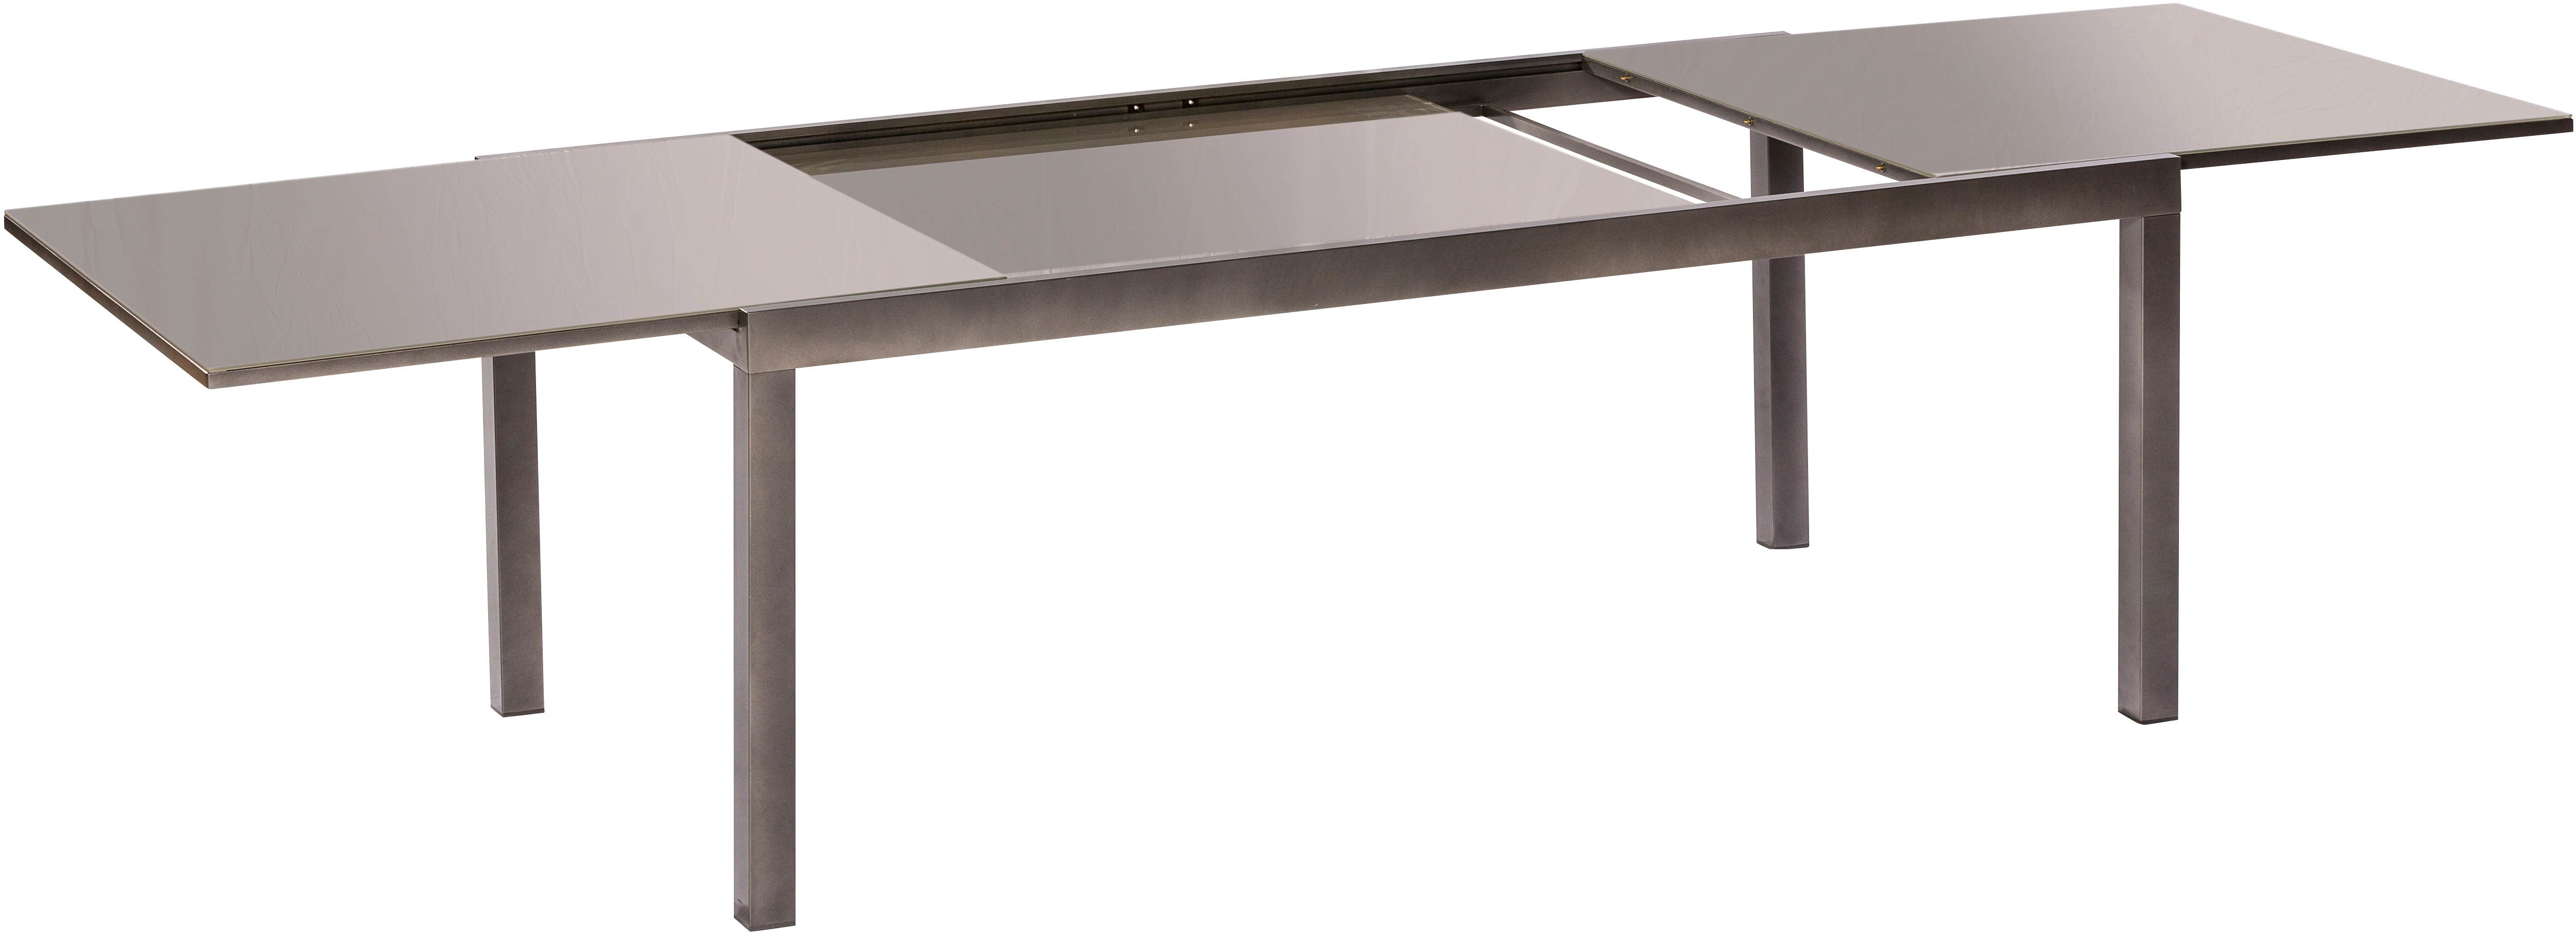 Merxx Gartentisch Semi Rechteckig Aluminium Grau 200/300 cm x 110 cm  Ausziehbar kaufen bei OBI